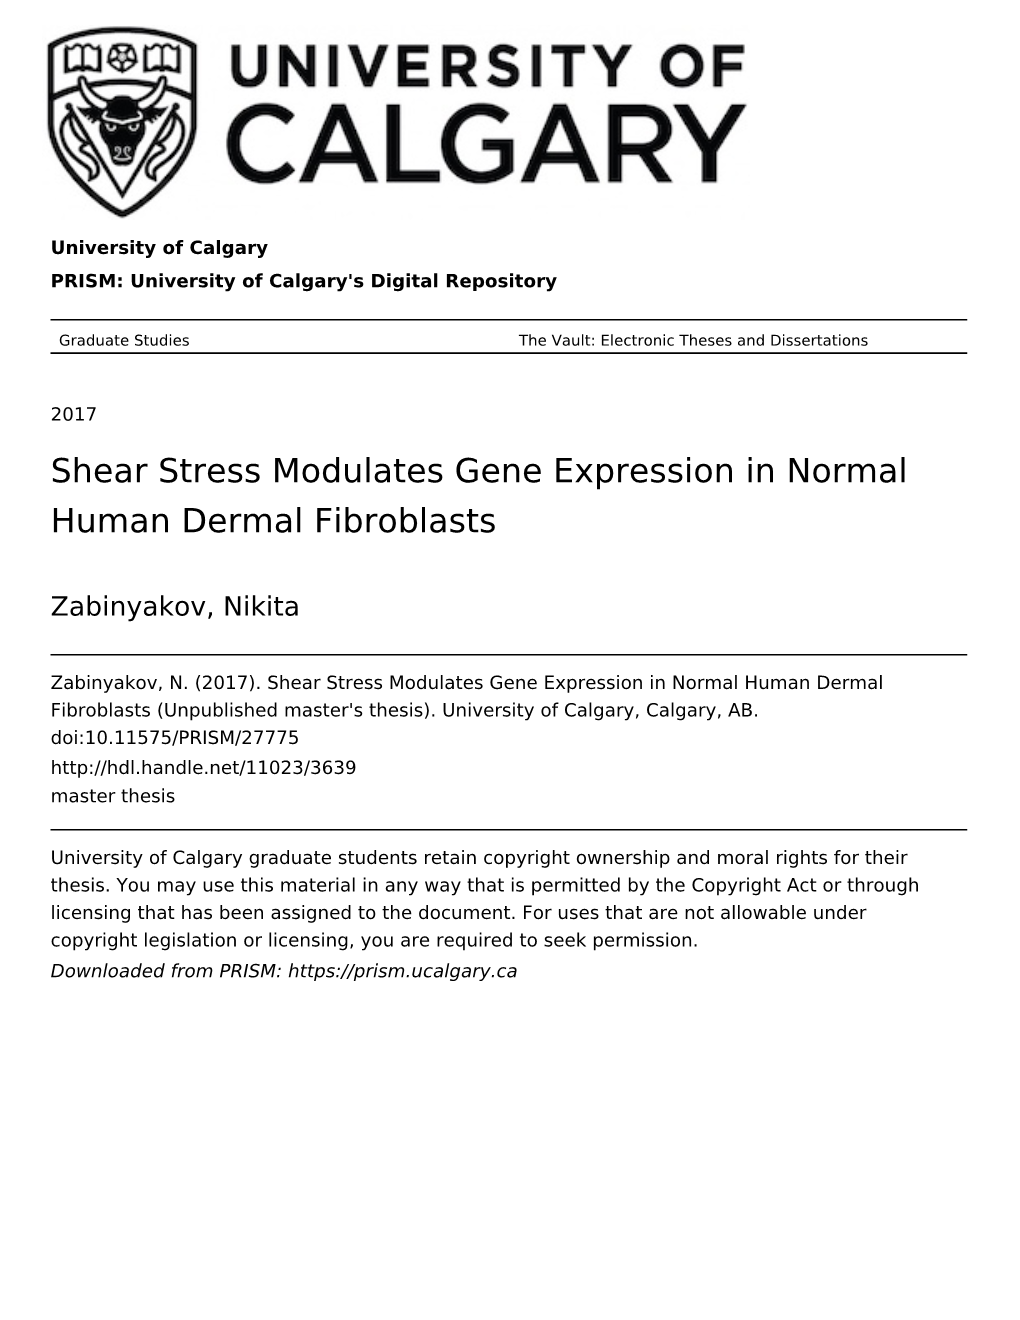 Shear Stress Modulates Gene Expression in Normal Human Dermal Fibroblasts